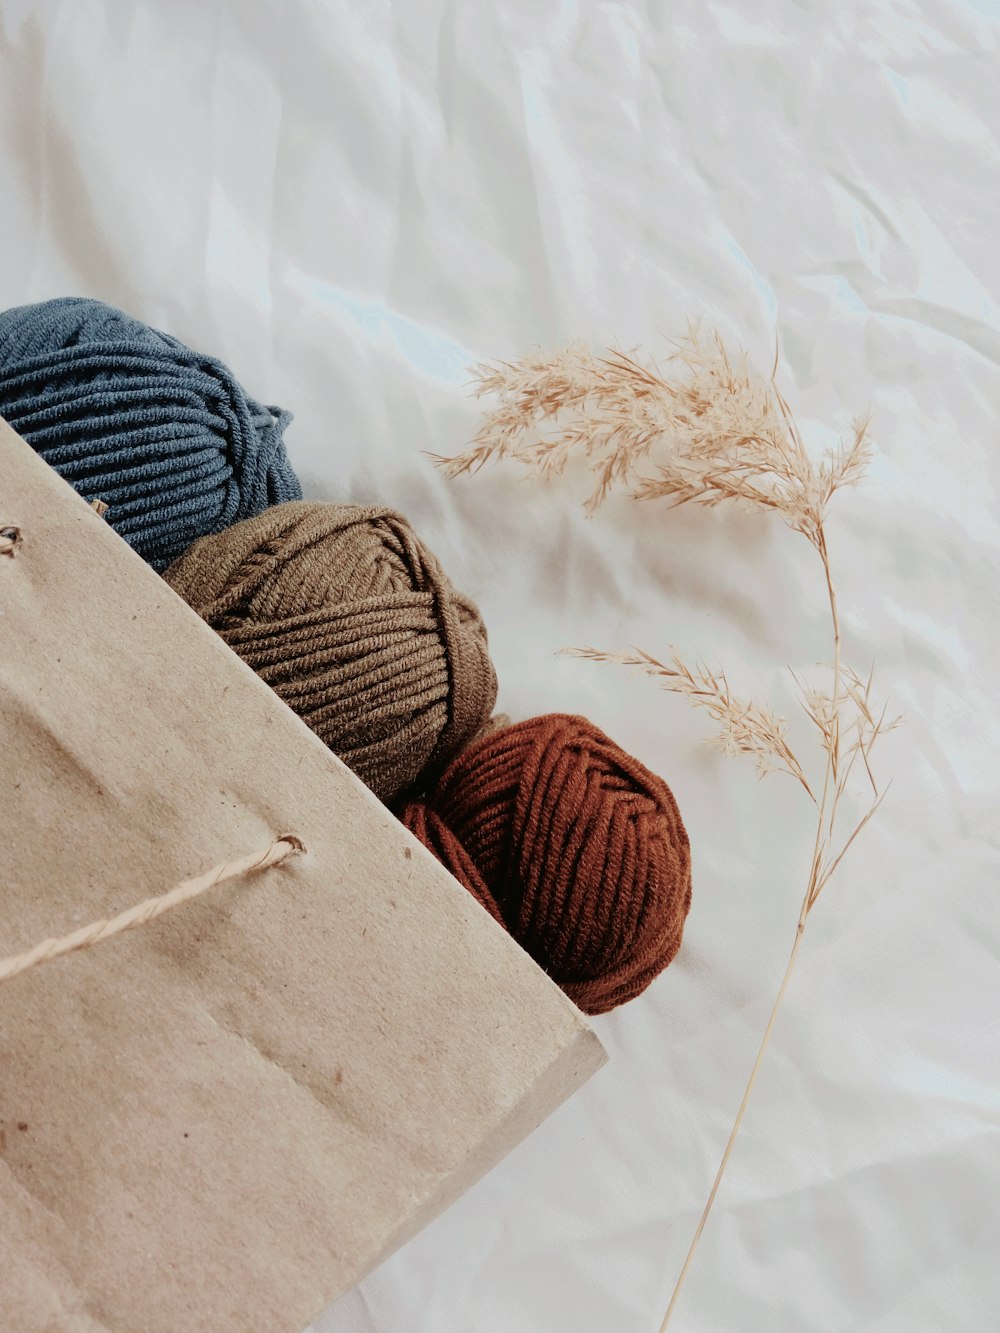 blue, brown, and orange yarn threads